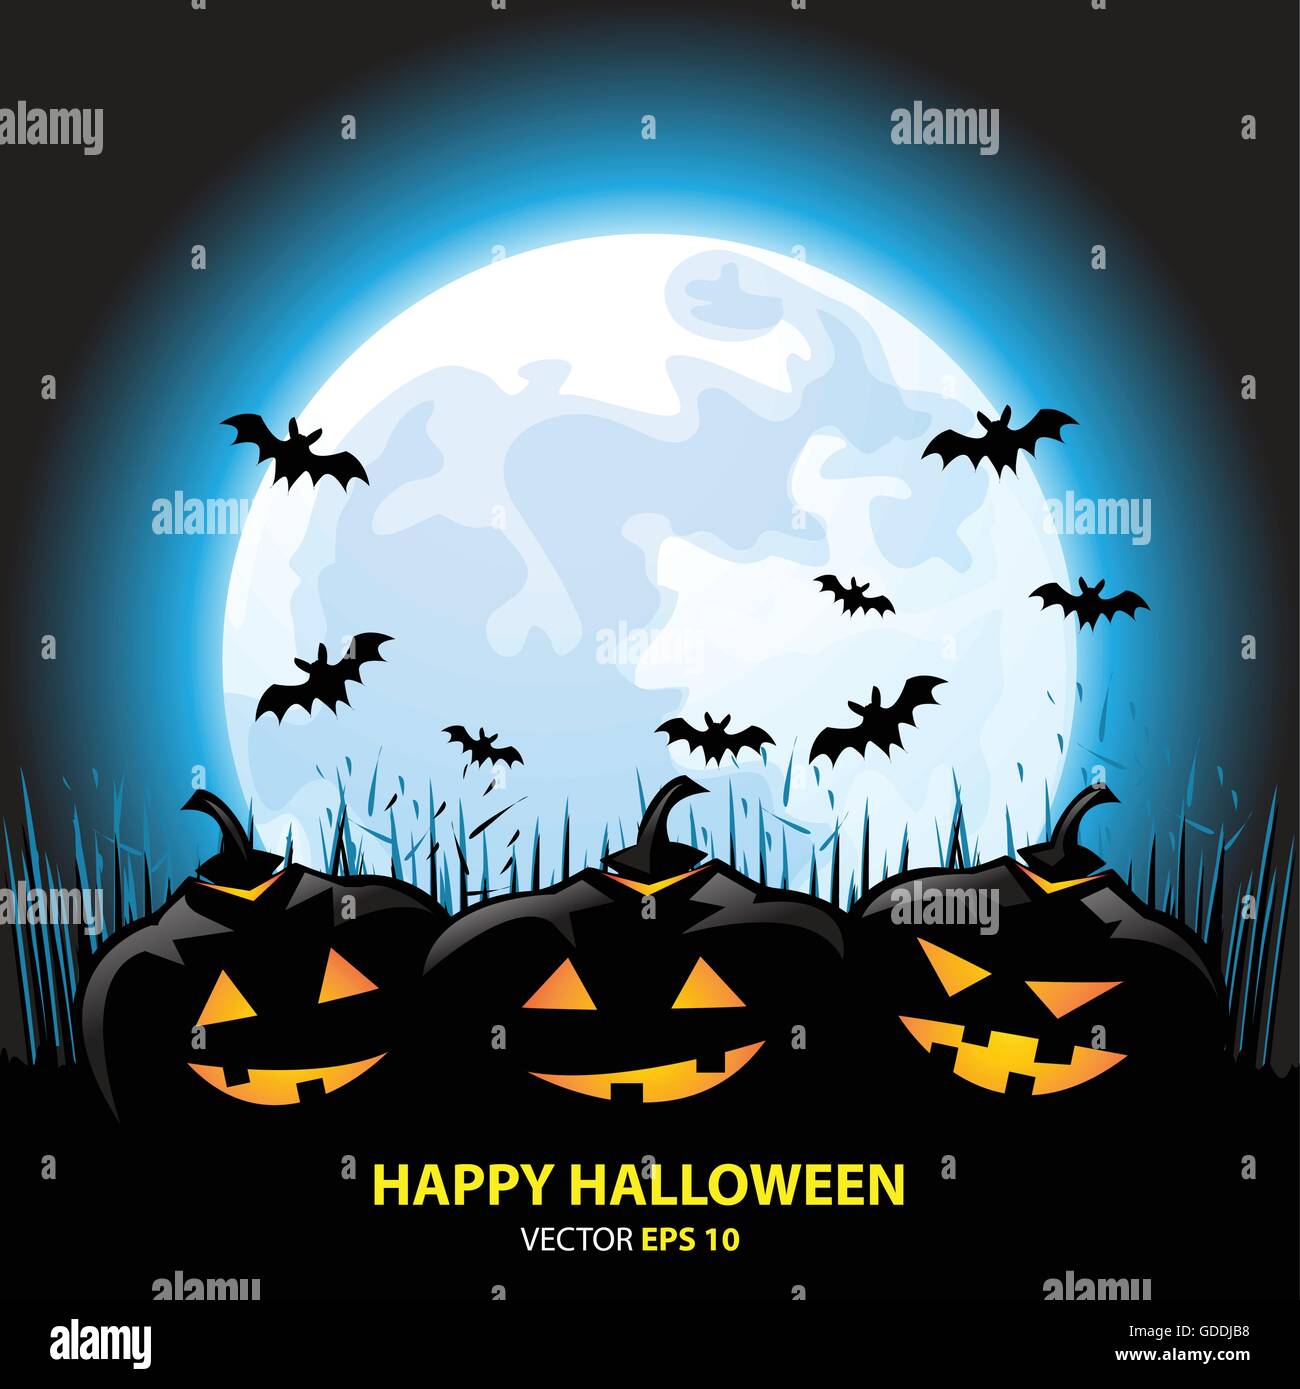 Happy Halloween pumpkins on blue moon light night party celebration festival vector illustration. Stock Vector